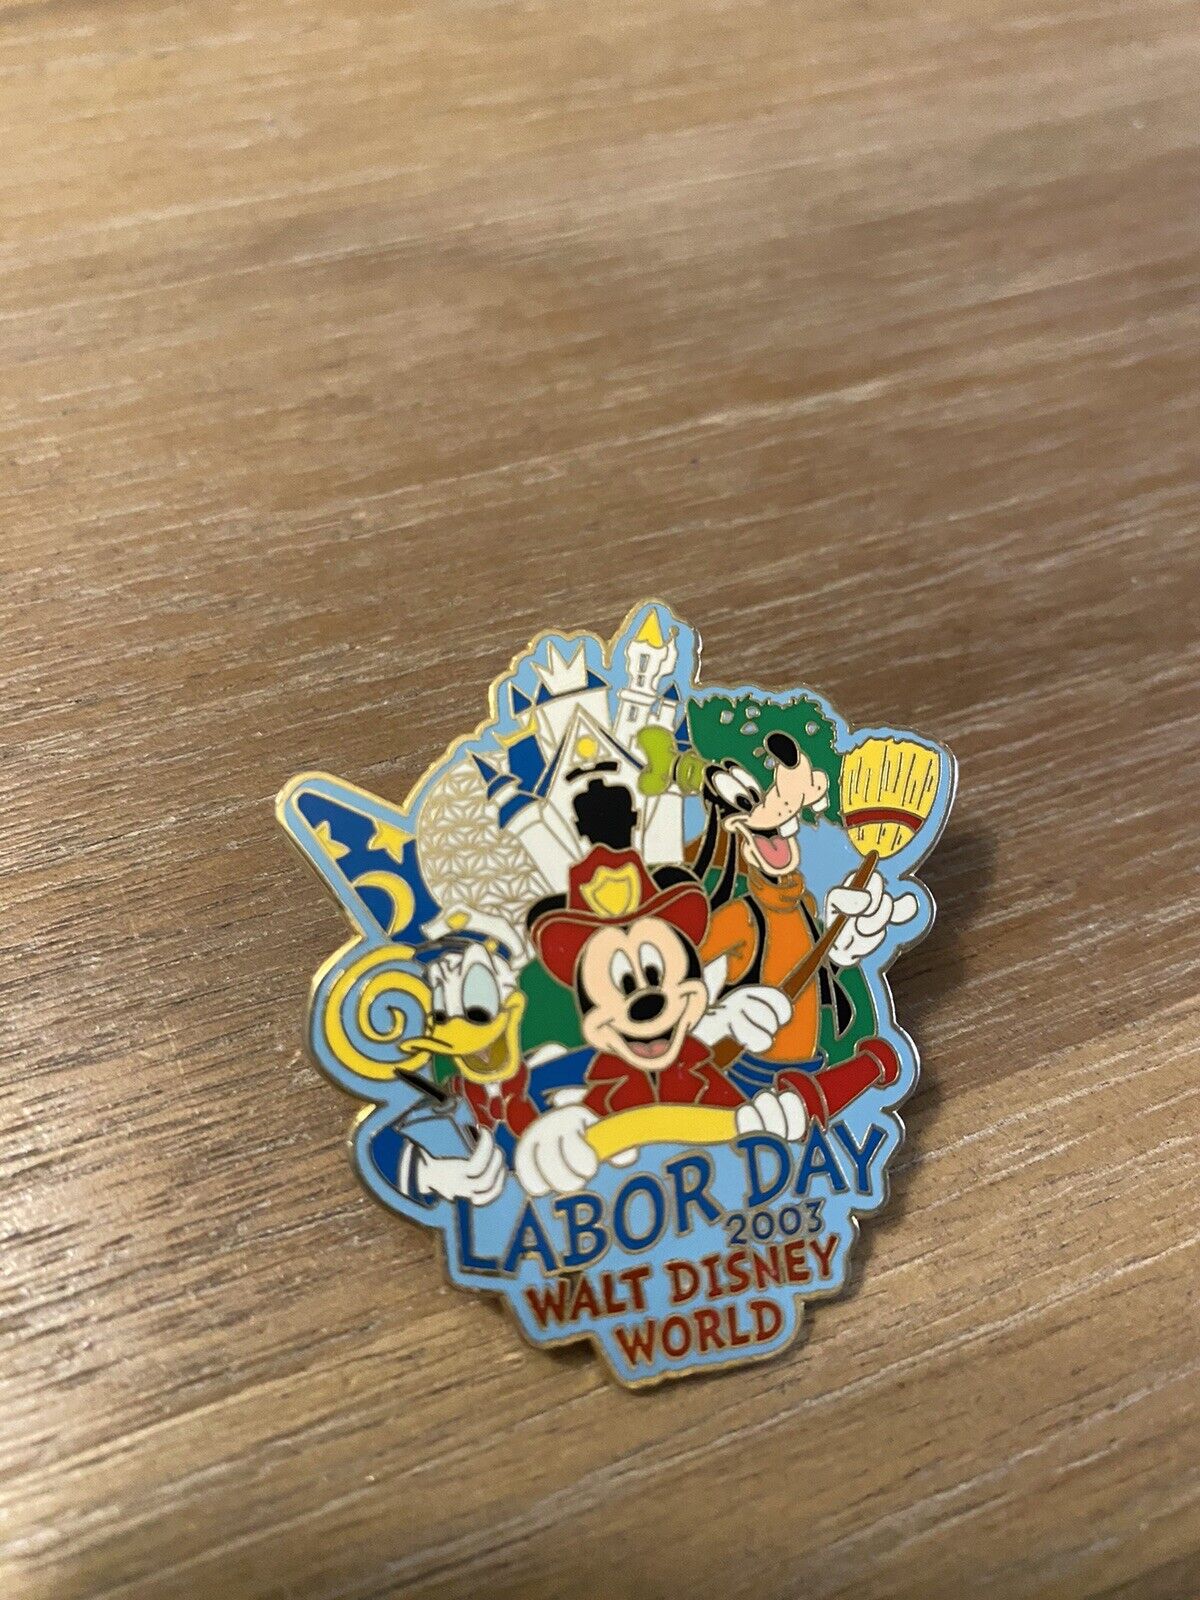 Disney Labor Day 2003 Walt Disney World Pin Limited Edition